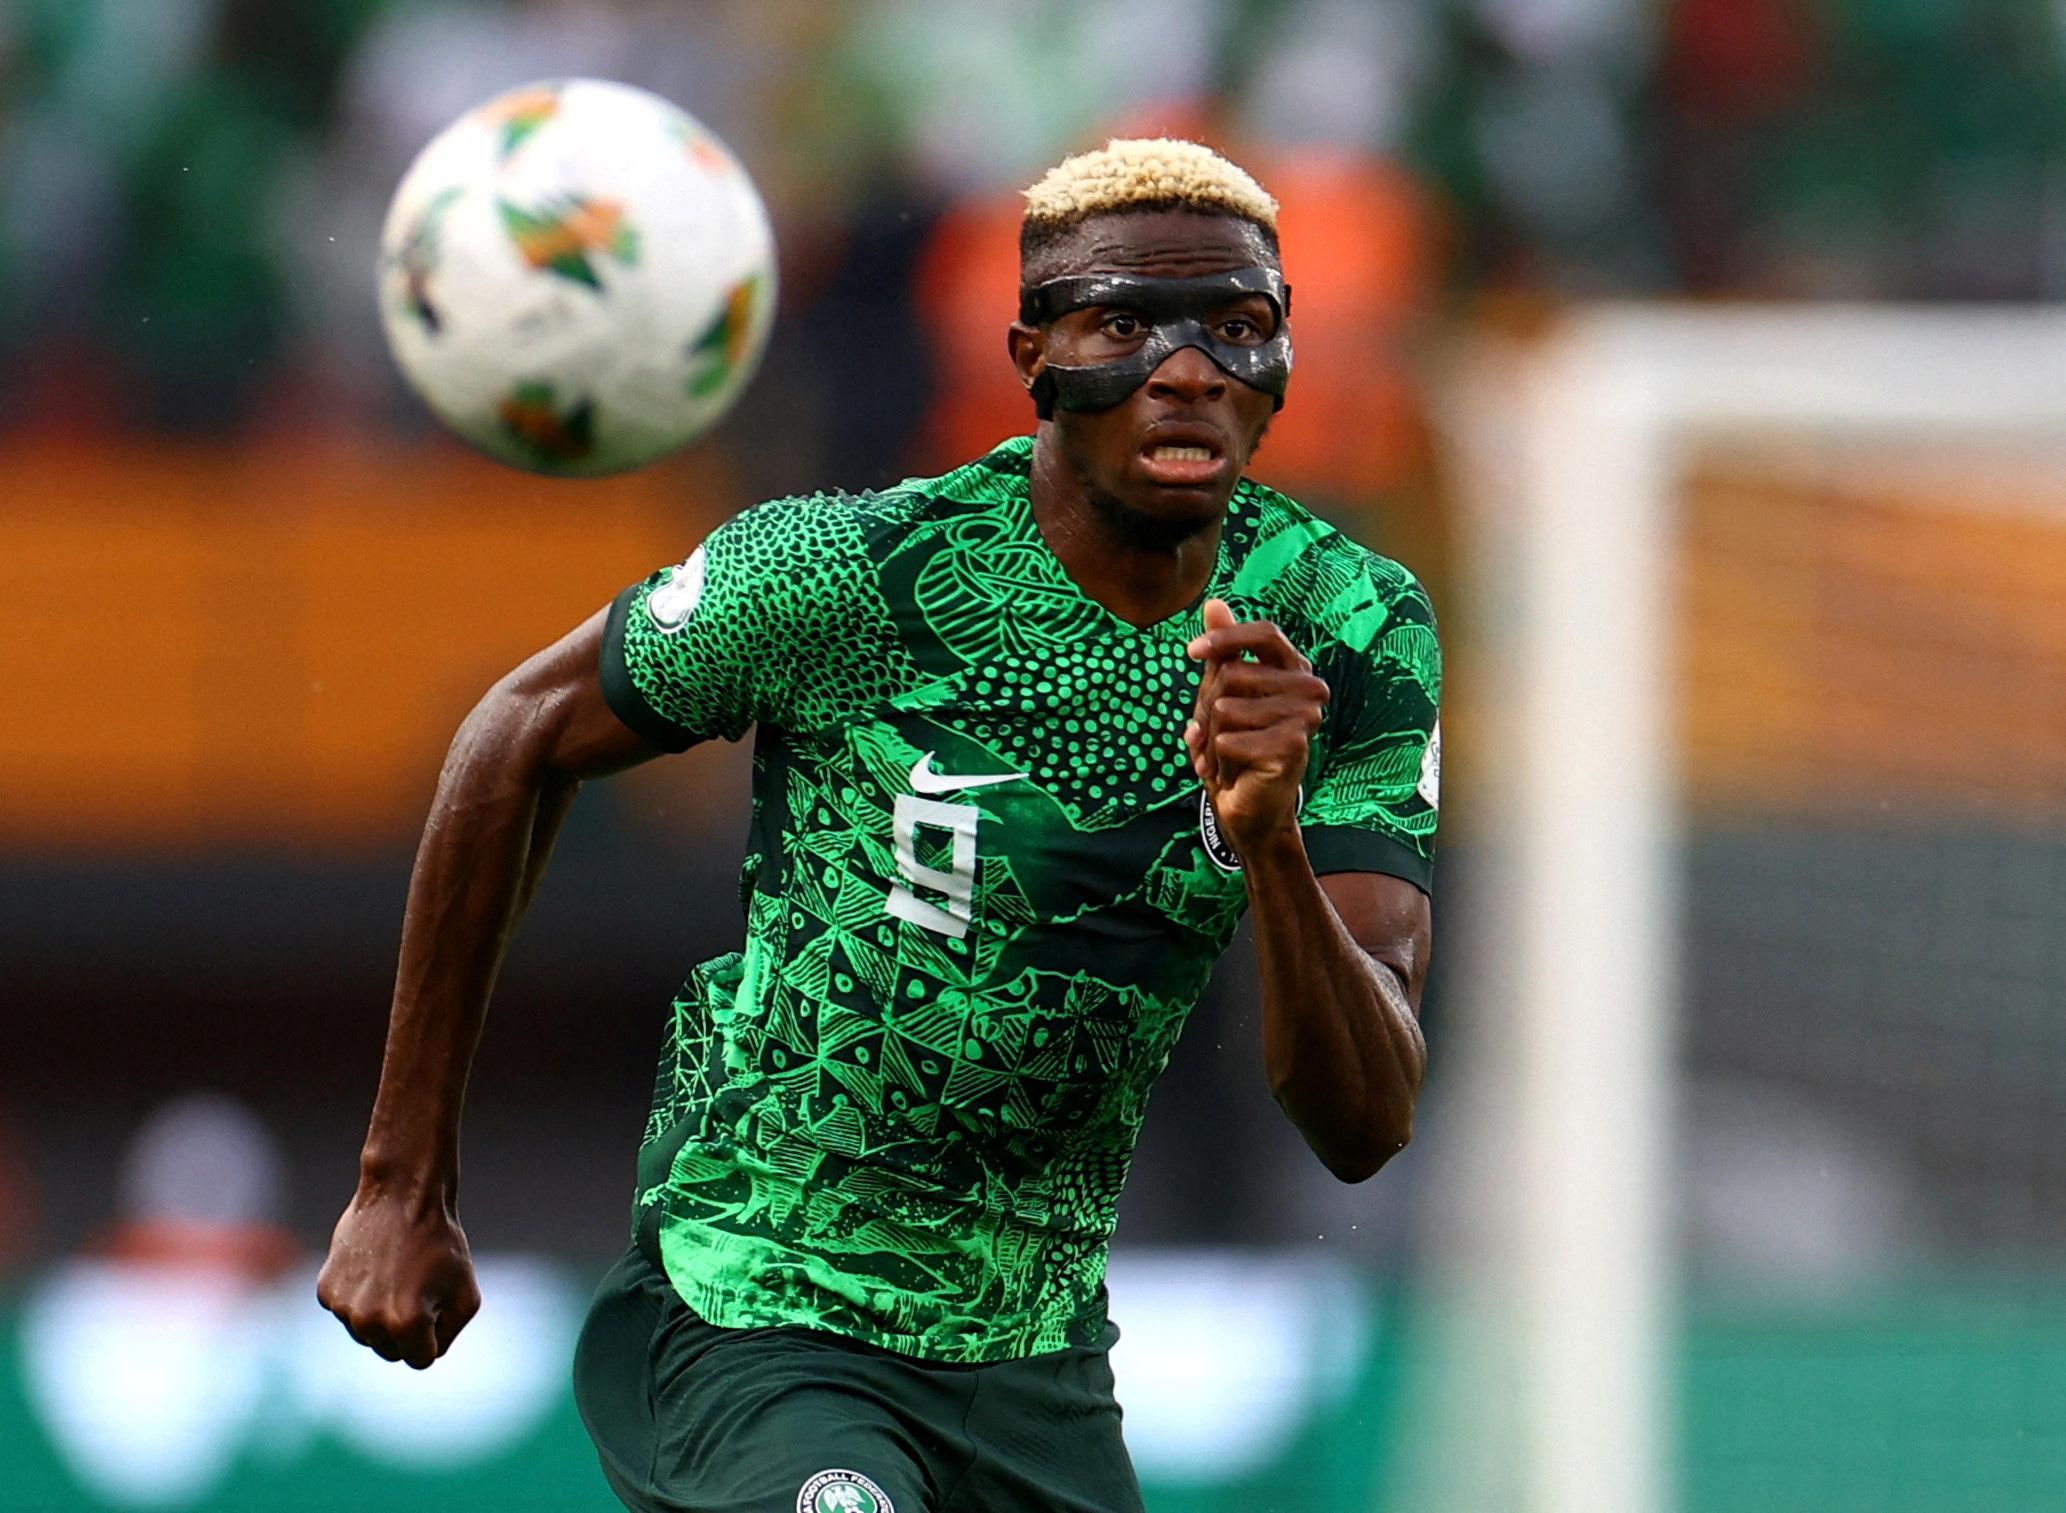 Нигерийцы оставят соперника за бортом Кубка Африки? Анонс матча Нигерия – Южная Африка